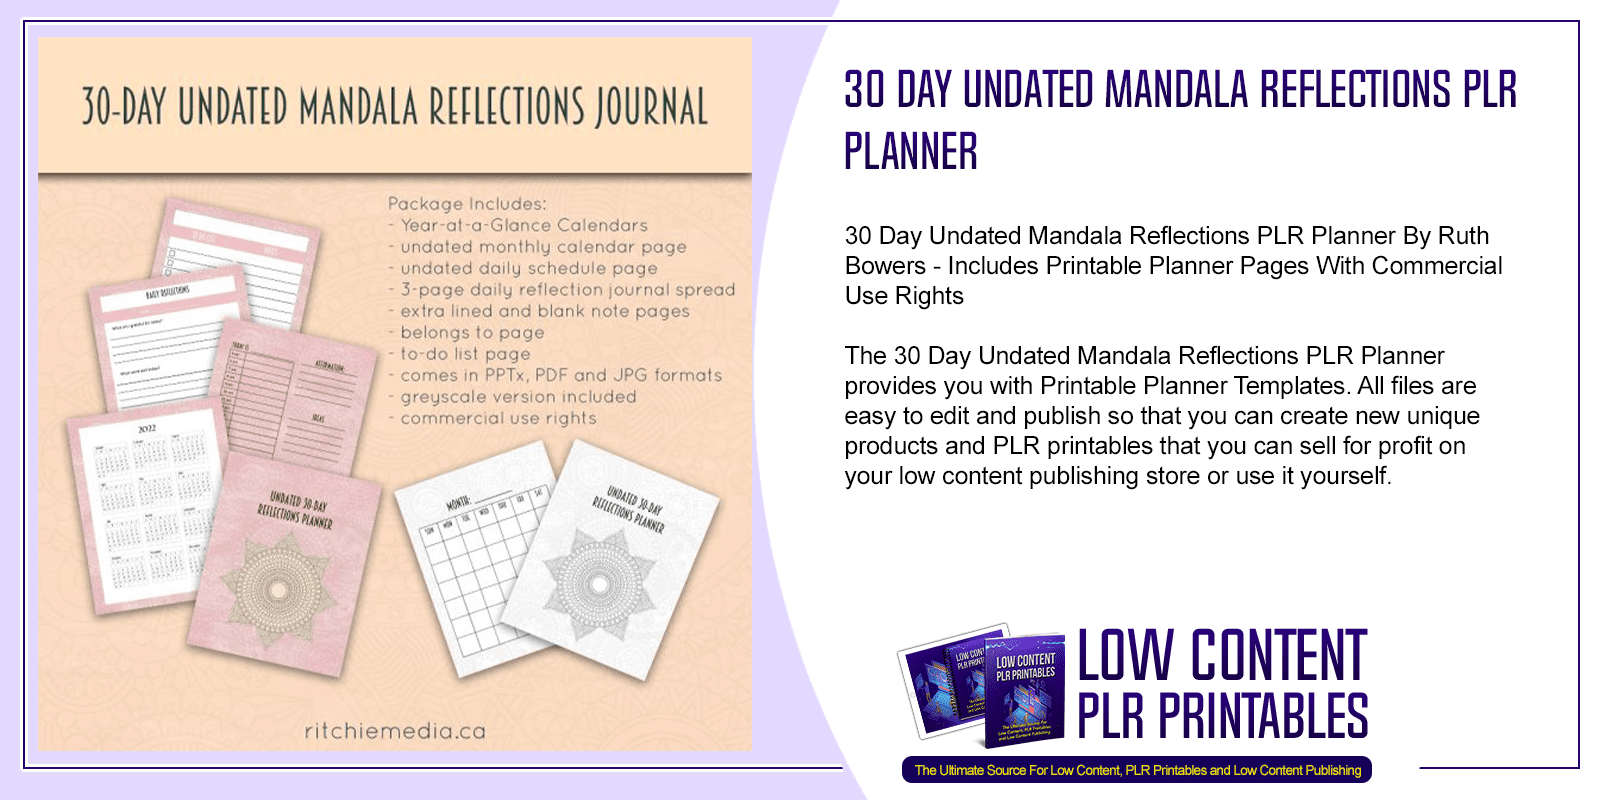 30 Day Undated Mandala Reflections PLR Planner